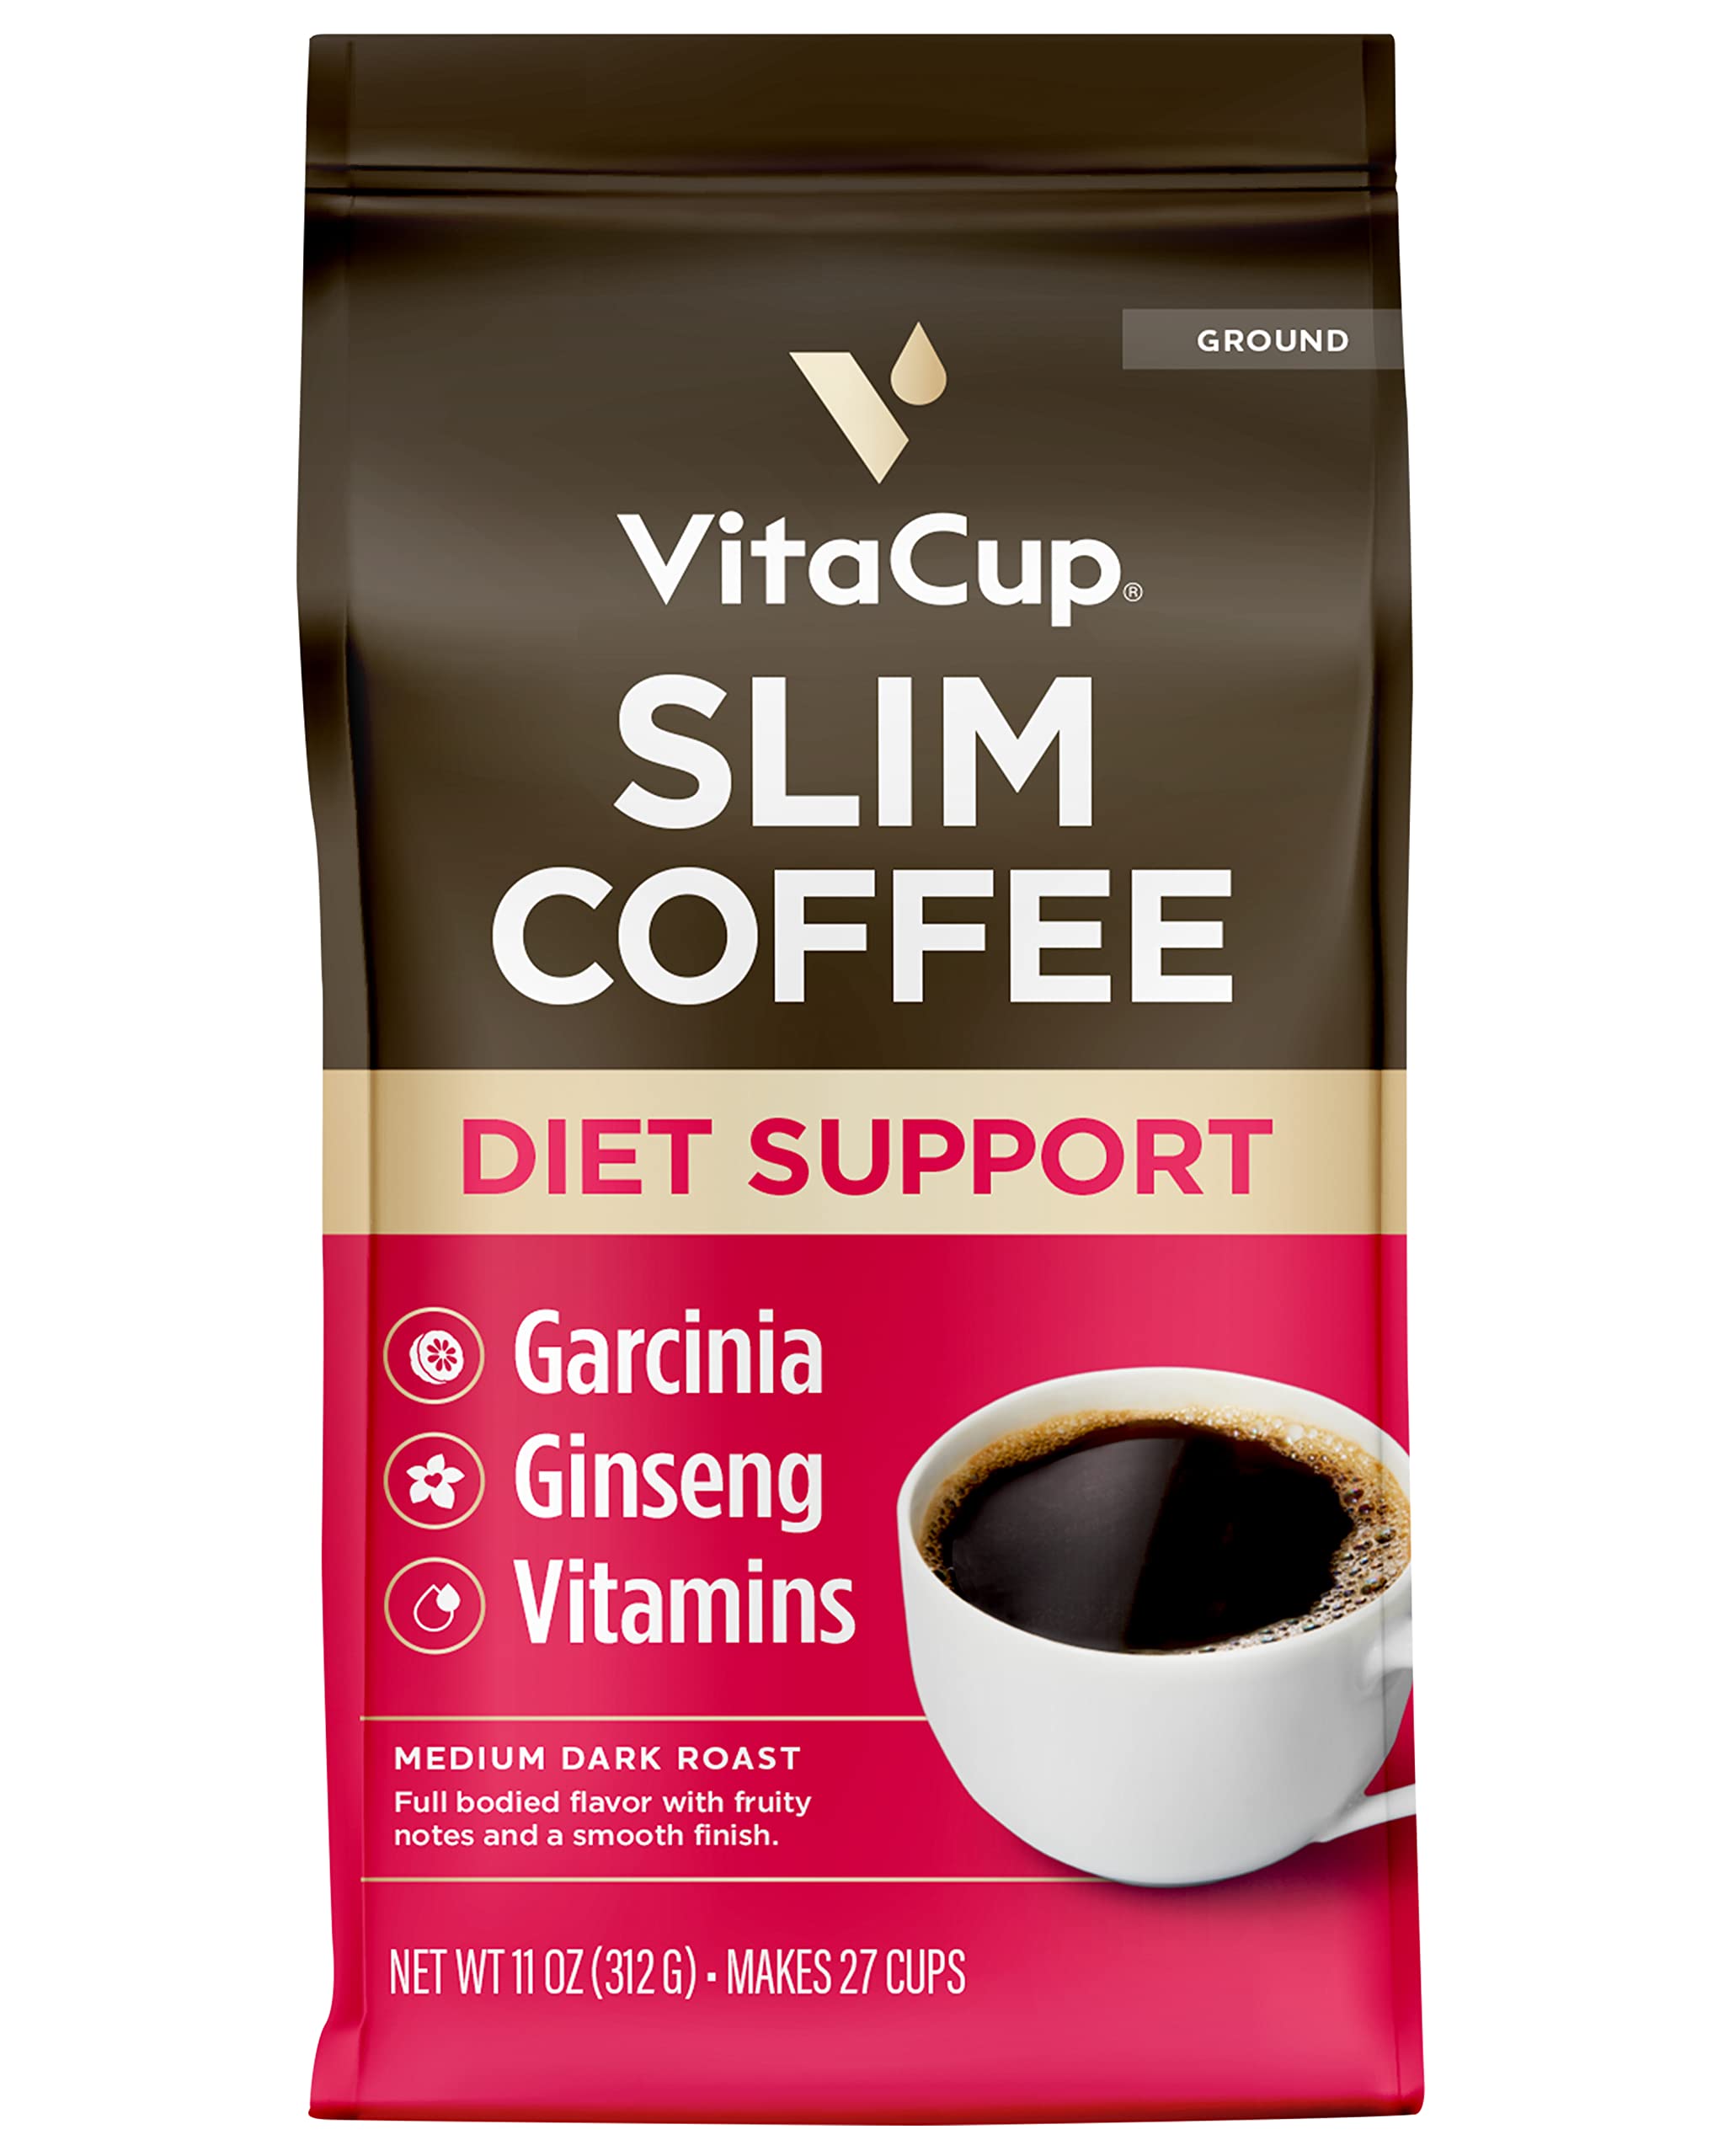 VitaCup Slim Ground Coffee, Diet Support with Ginseng, Garcinia, B Vitamins, Medium Dark Roast, Bold and Smooth,100% Arabica Specialty Coffee Grounds, 11oz